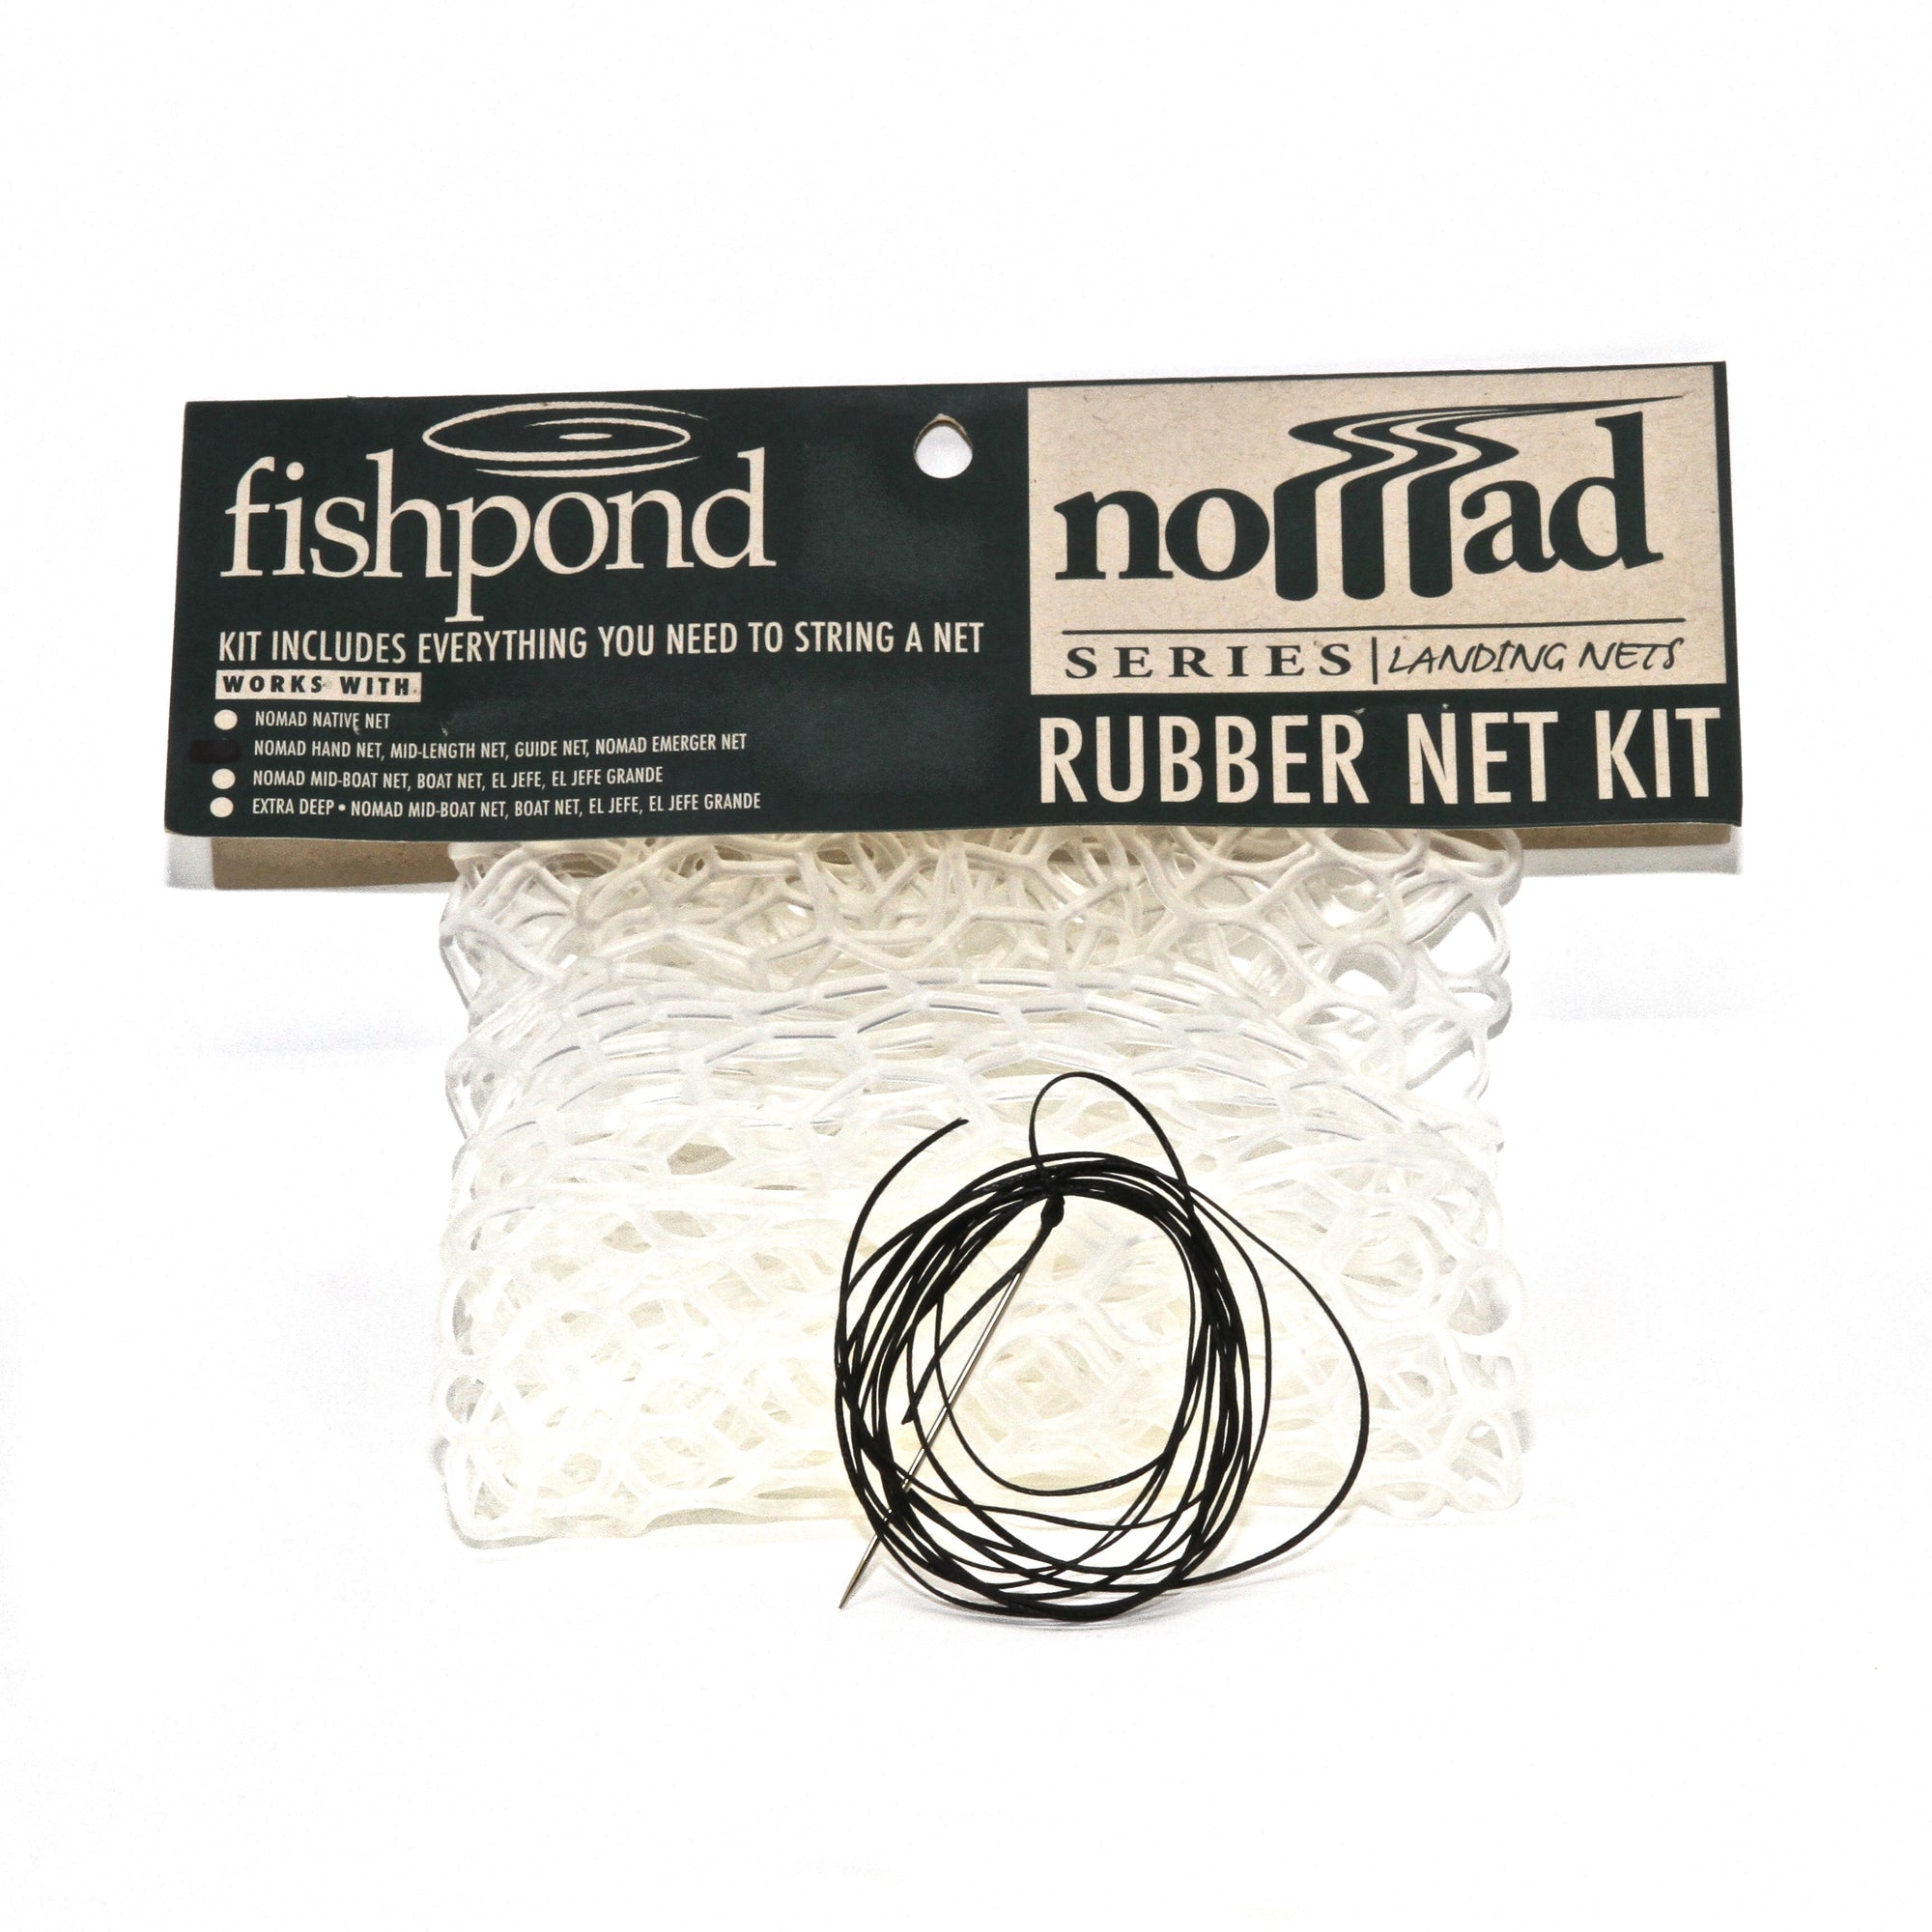  Replacement Fishing Net, Deepened Fishing Rubber Net